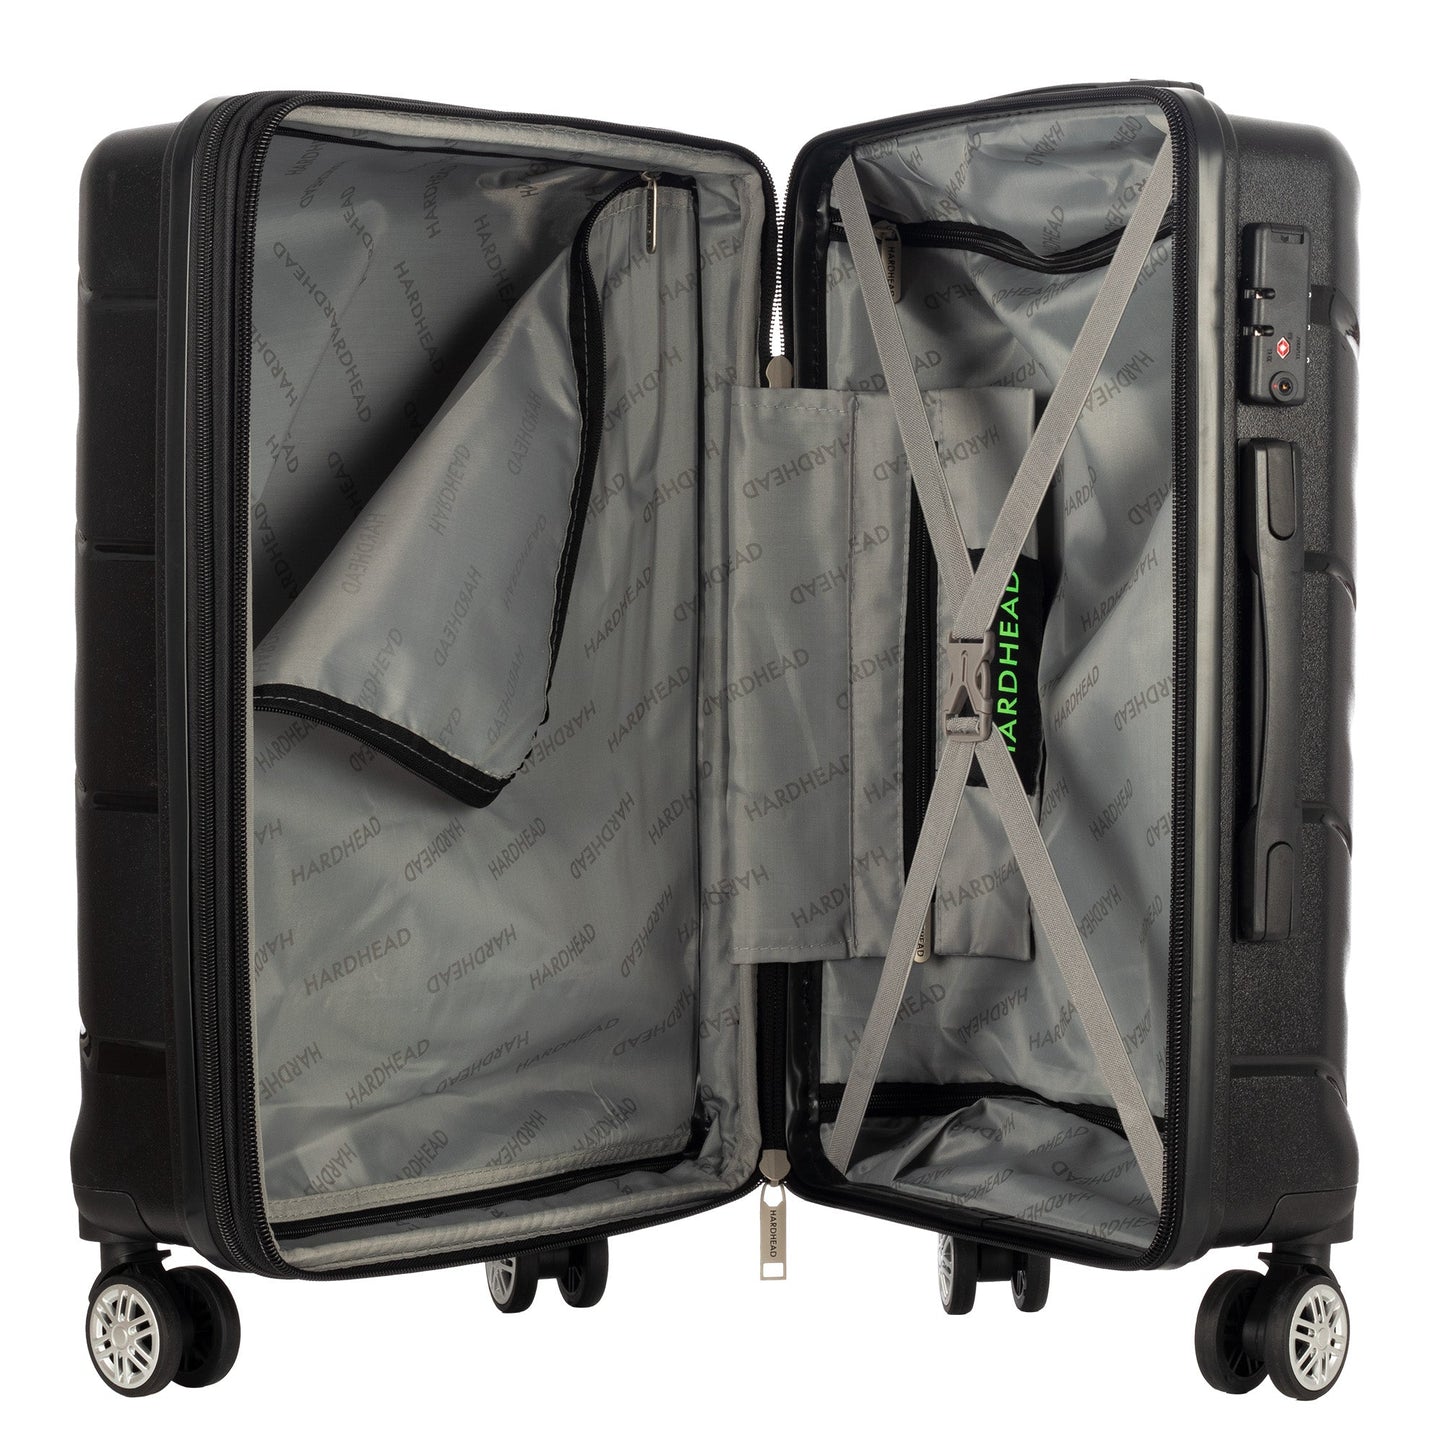 Ian collection black luggage (21") Suitcase Lock Spinner Hardshell